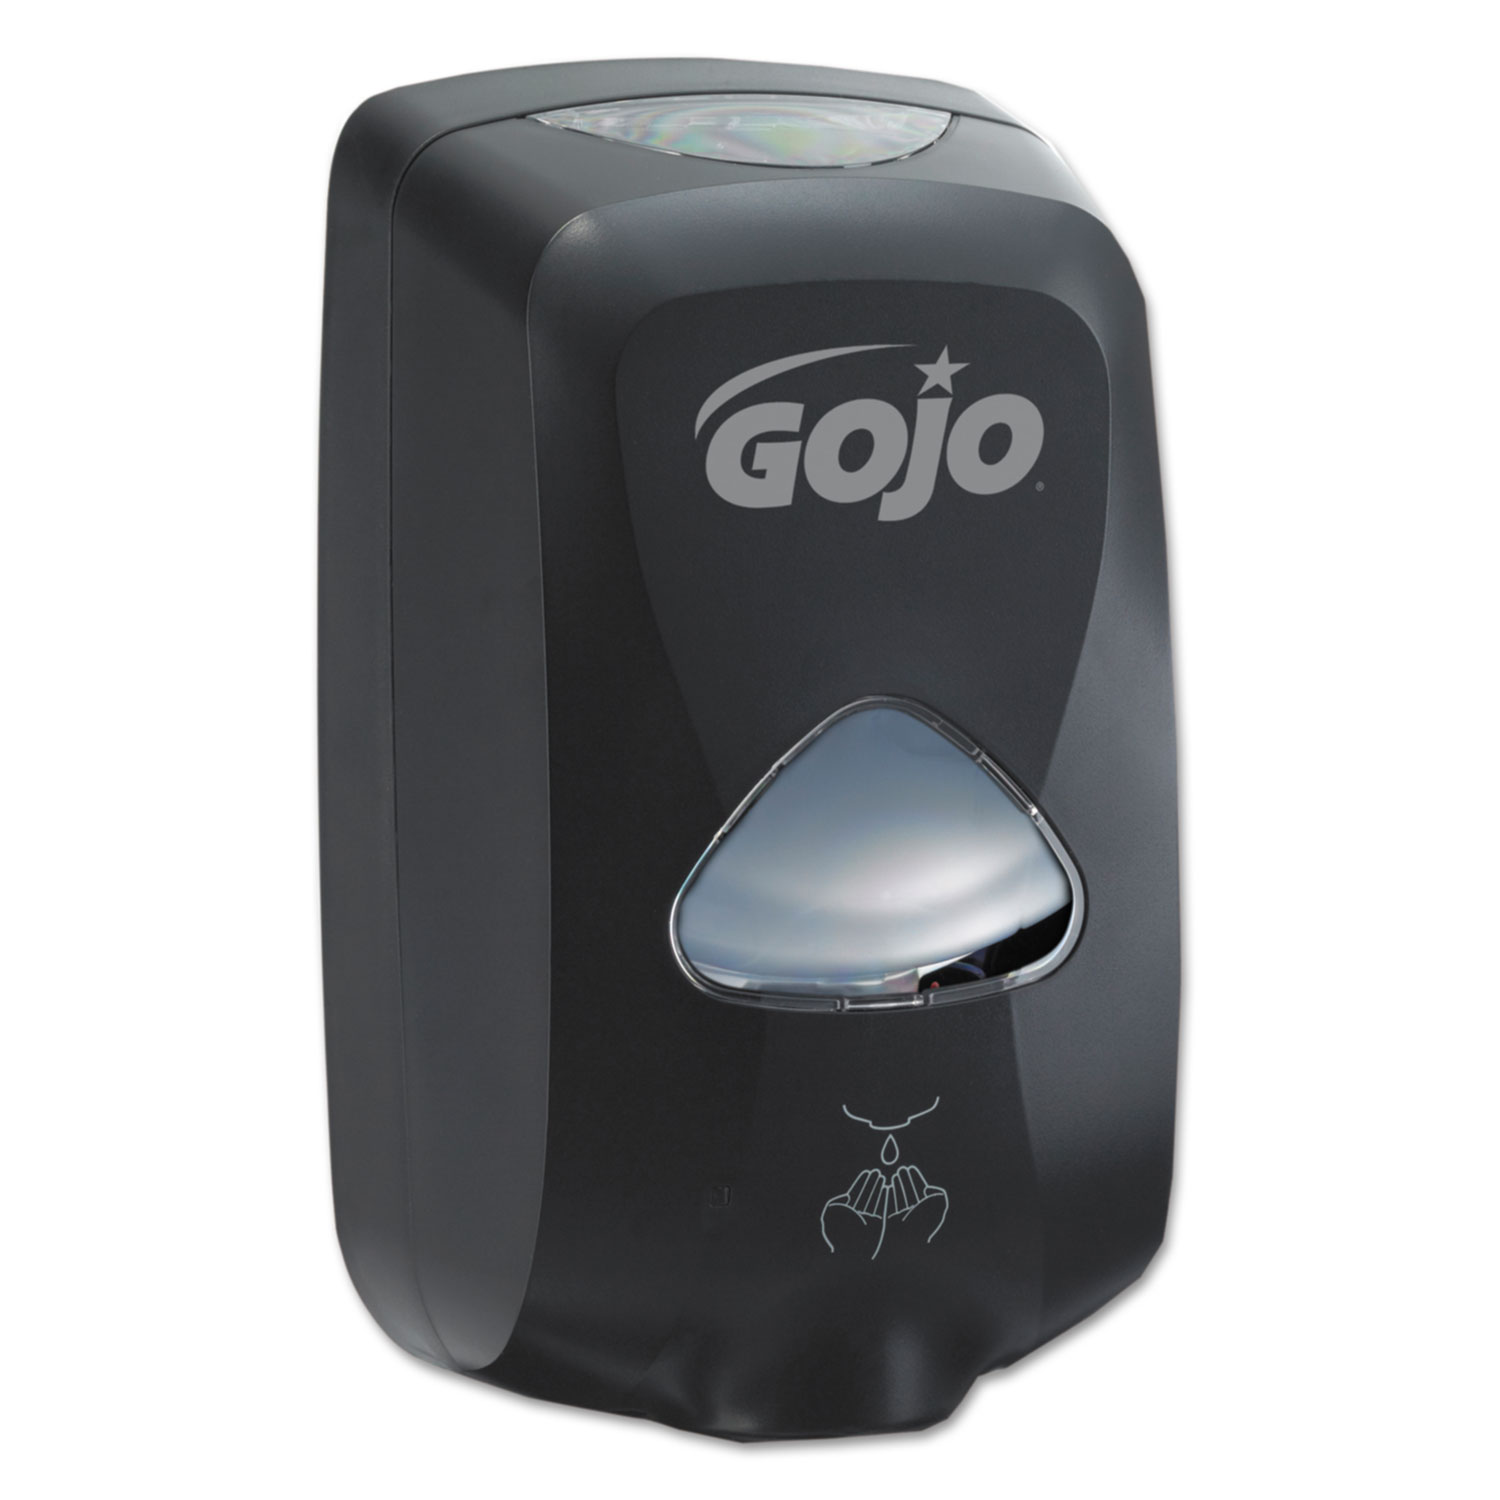  GOJO 2730-12 TFX Touch-Free Automatic Foam Soap Dispenser, 1200 mL, 4.1 x 6 x 10.6, Black (GOJ273012) 